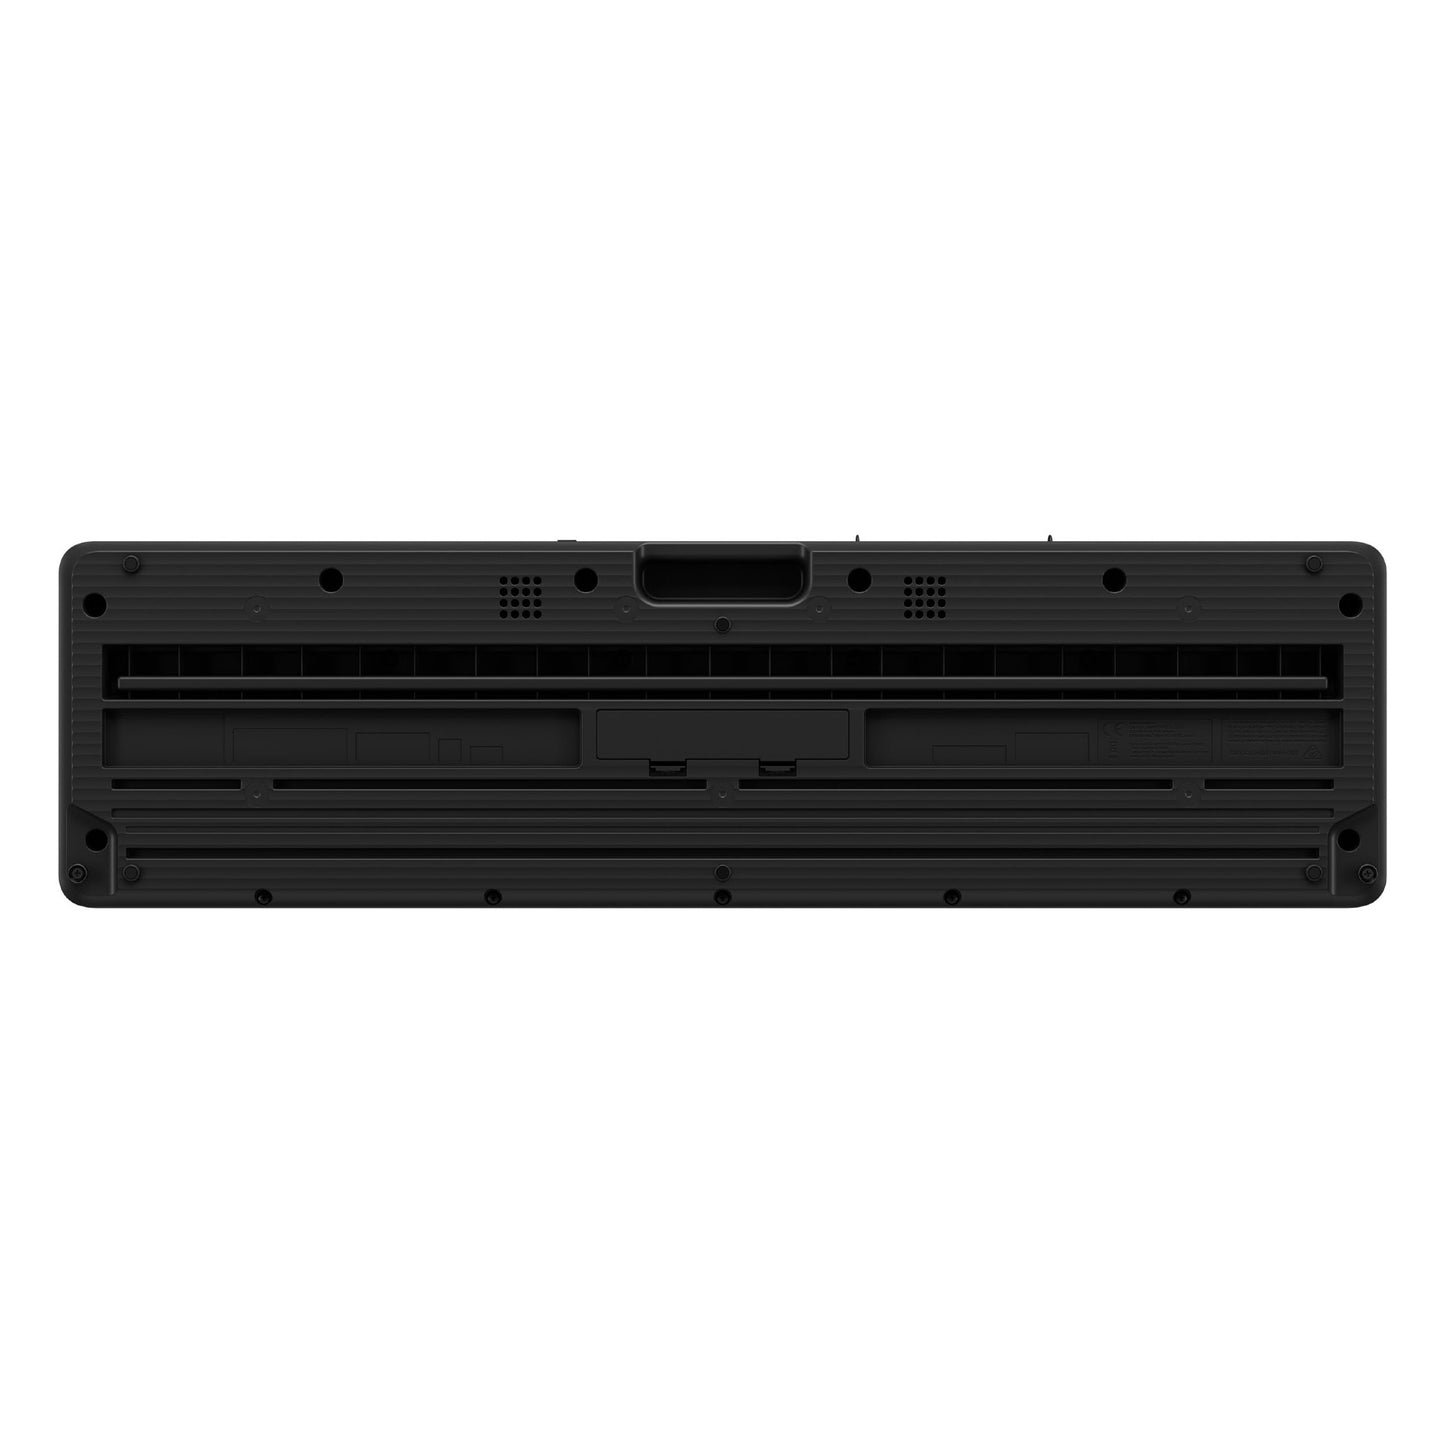 Casio CT-S1 Portable 61-key Keyboard Black